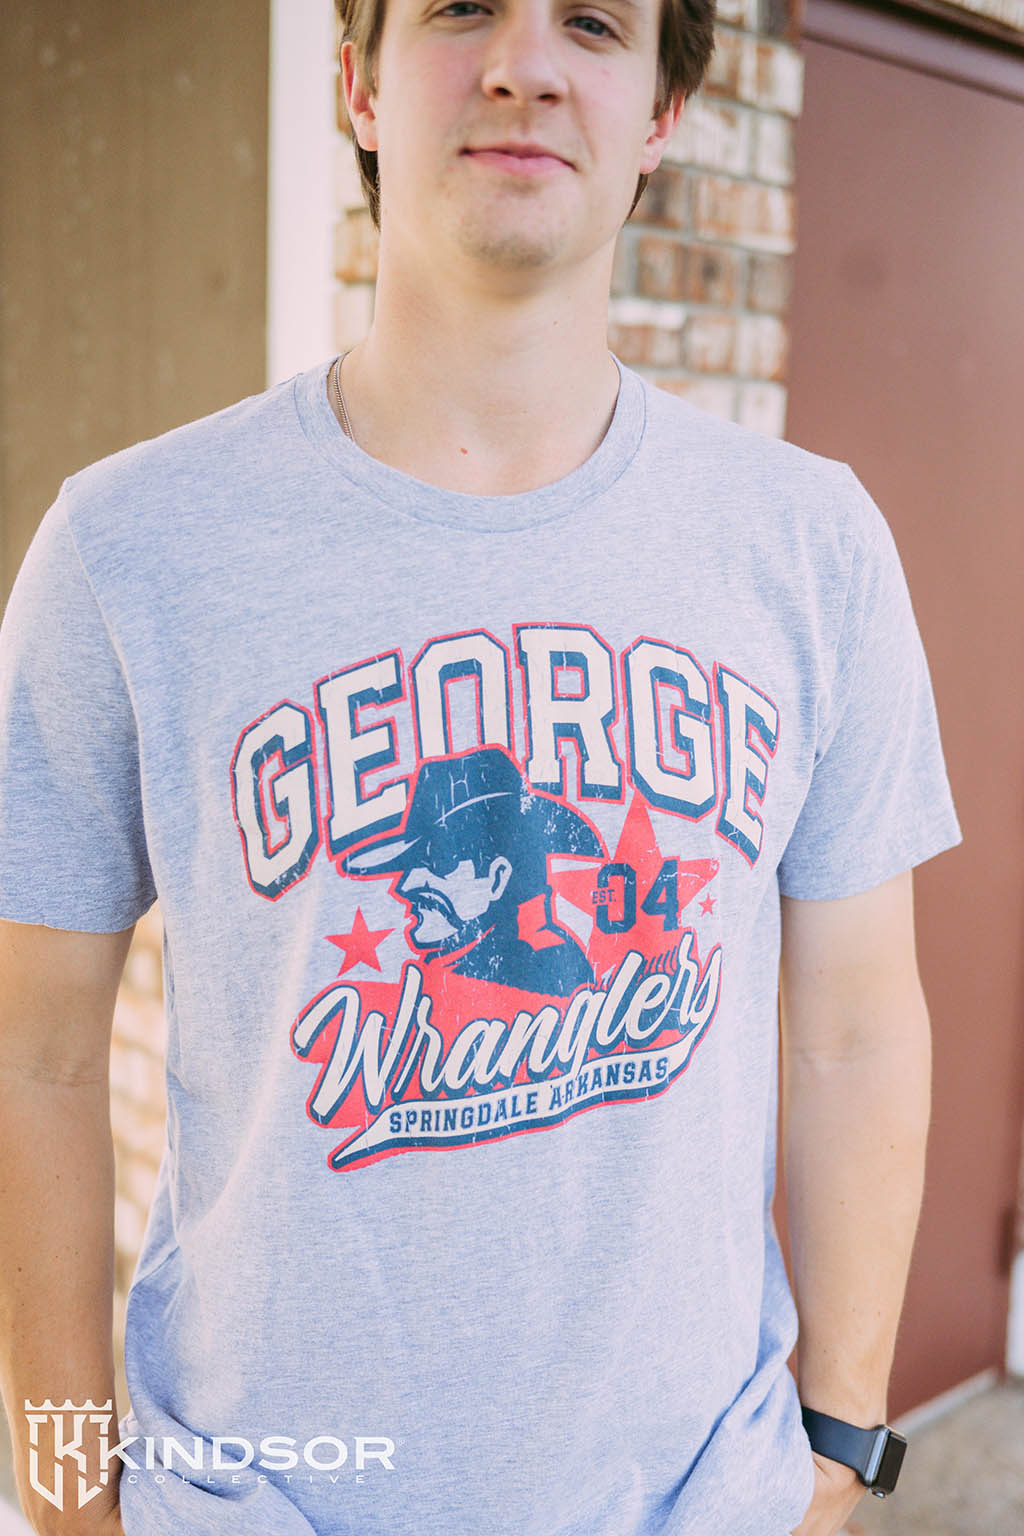 George Junior High School Wrangler Tshirt